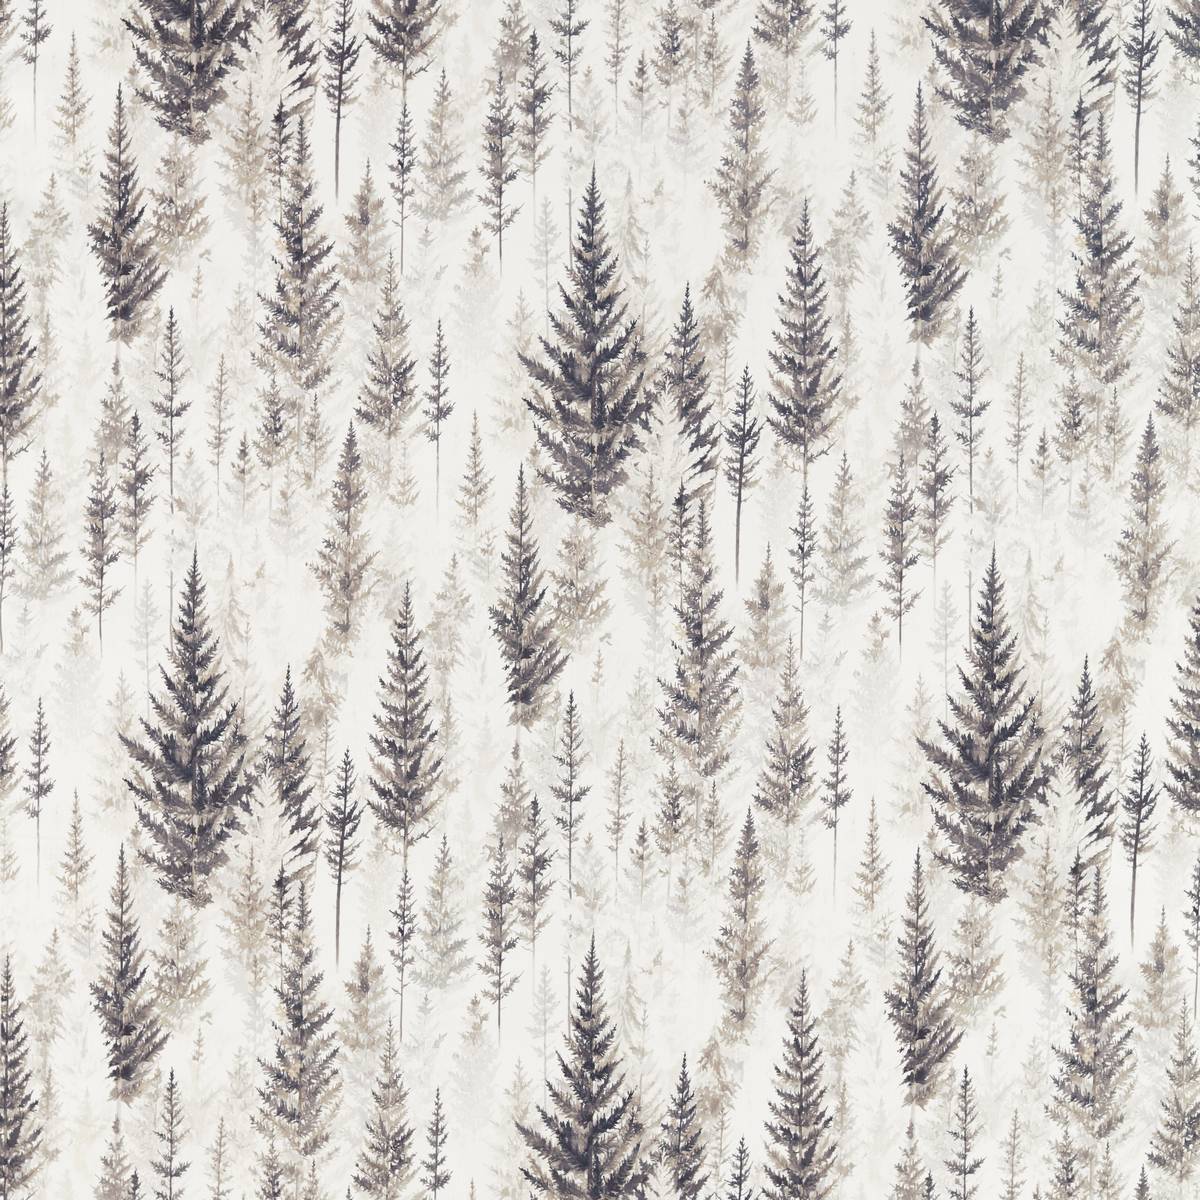 Juniper Pine Elder Bark Fabric by Sanderson